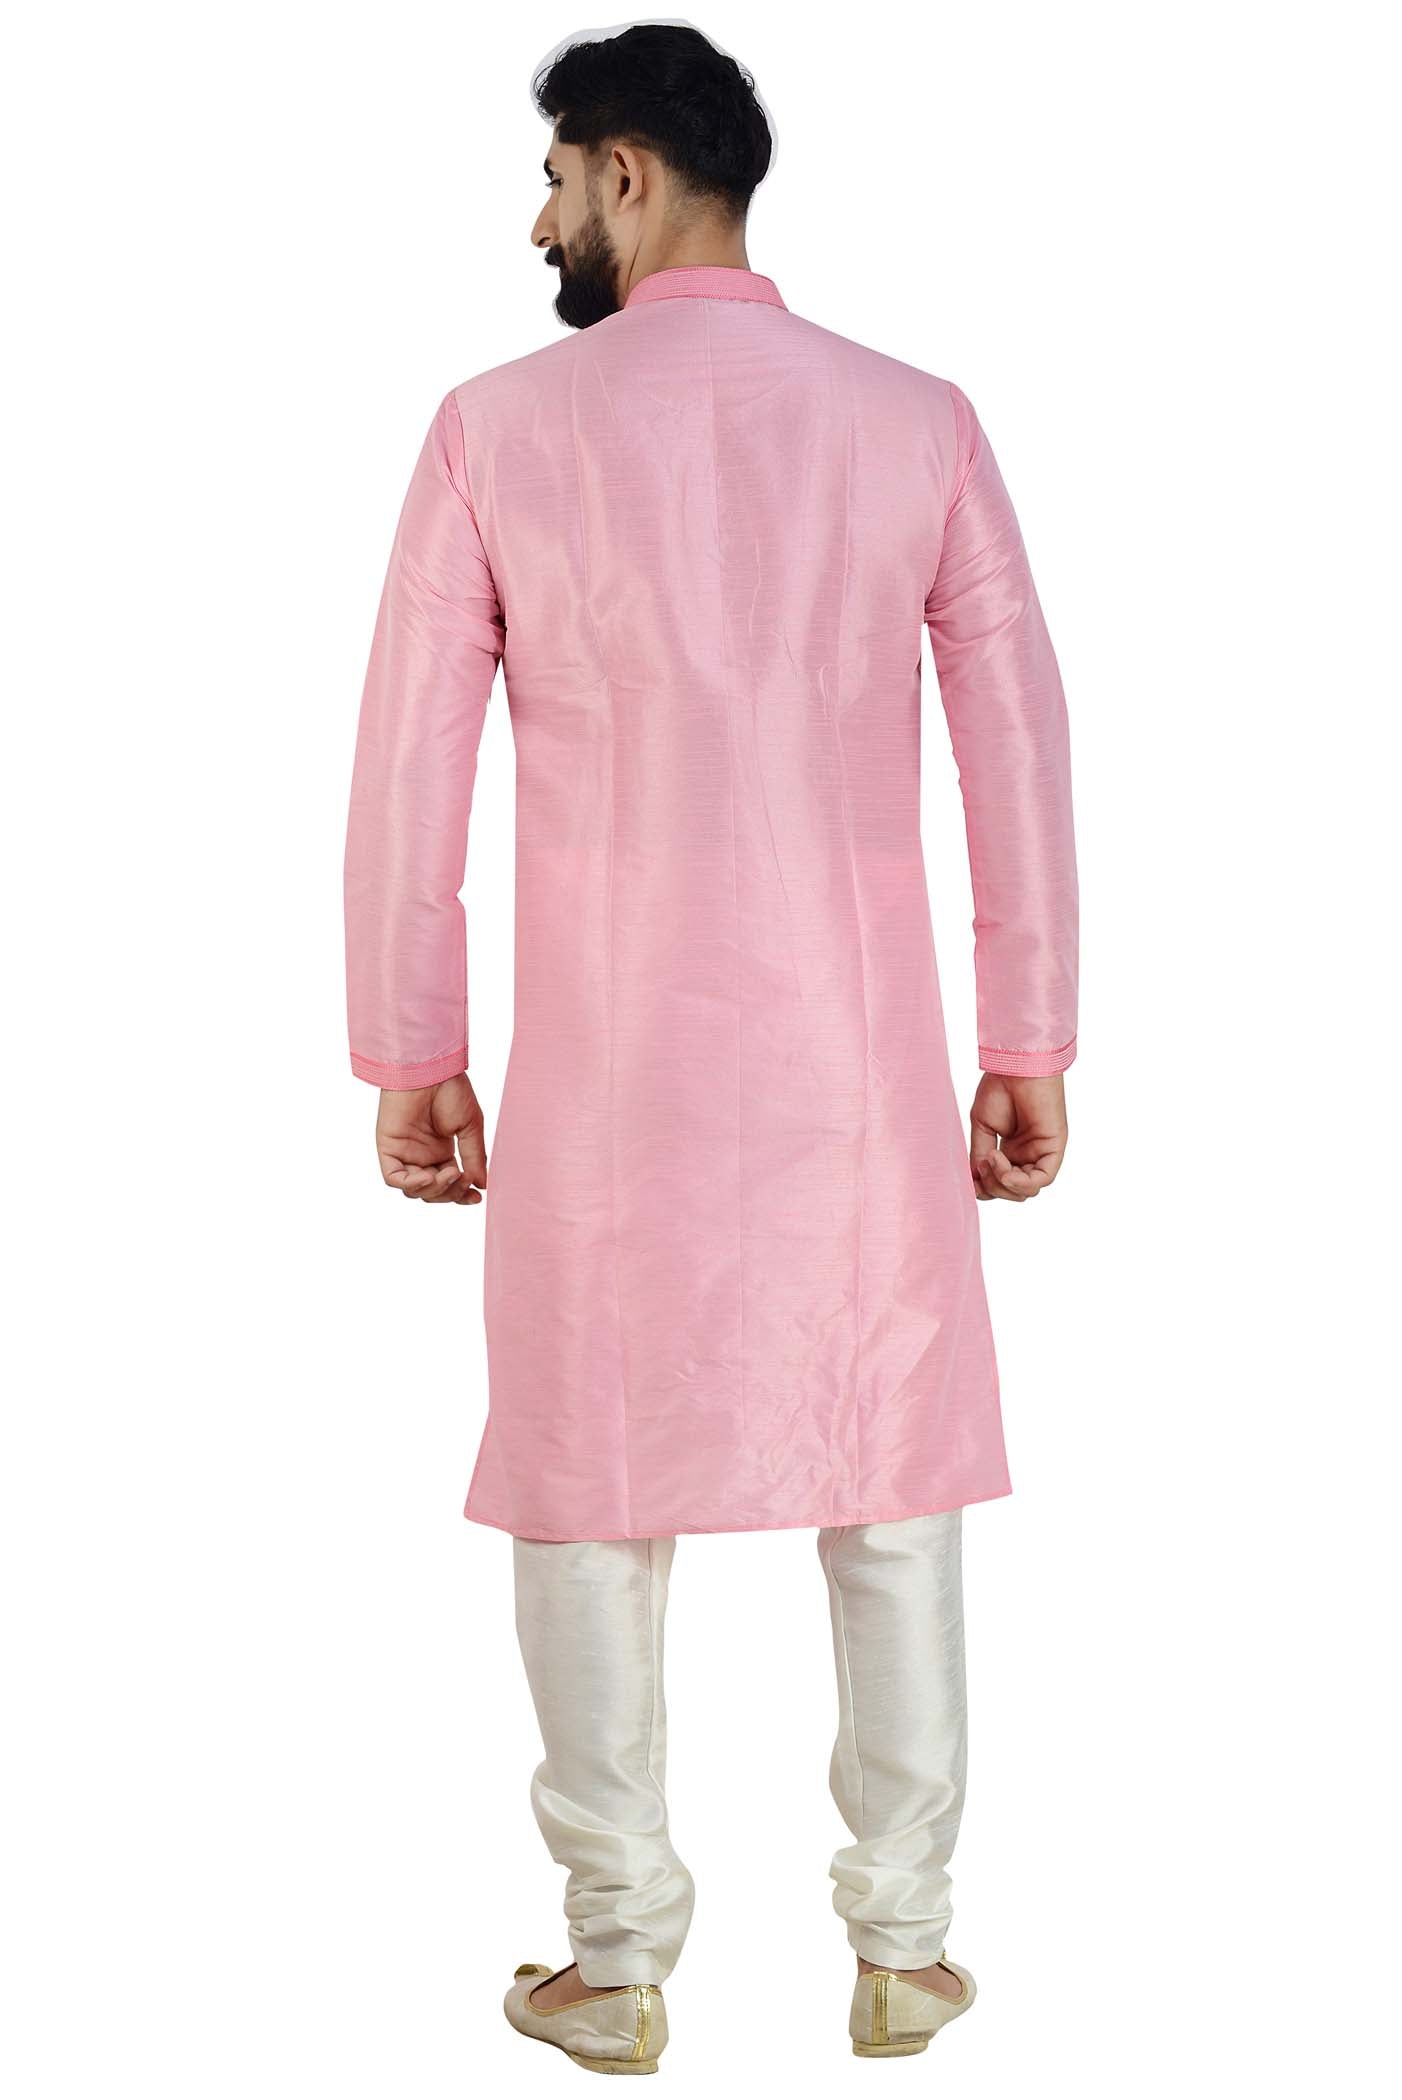 Thread Embroidered Dupion Silk Kurta Suit - Light Pink